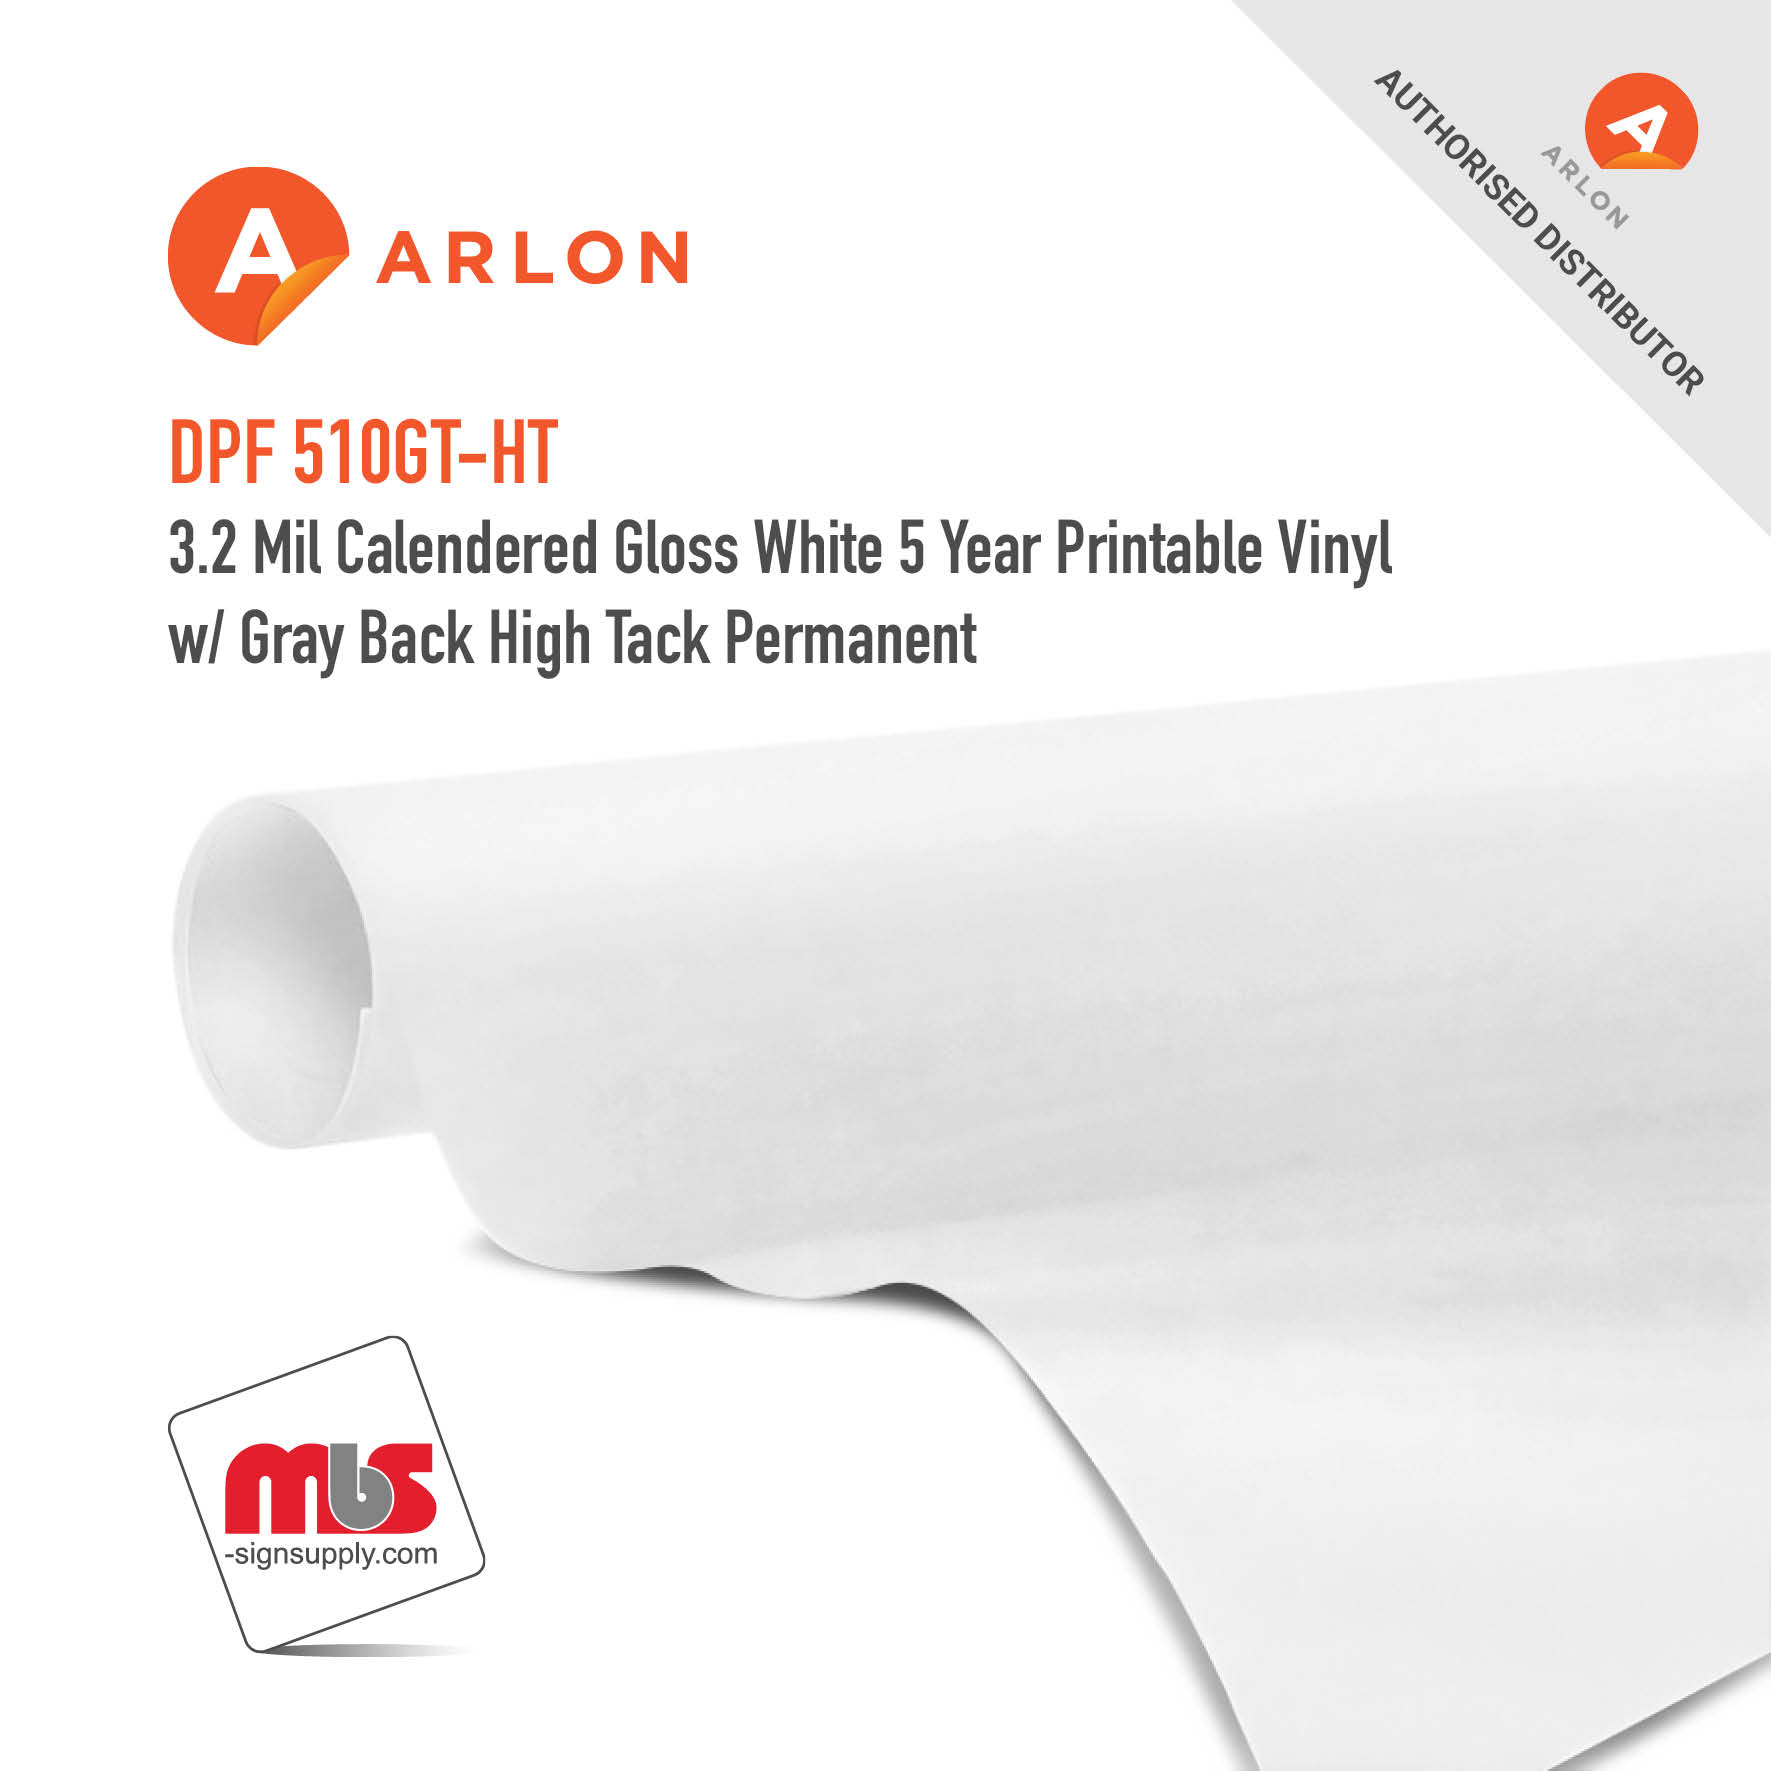 54'' x 50 Yard Roll - Arlon DPF 510GT-HT 3.2 Mil Calendered Gloss White 5 Year Printable Vinyl w/ Gray Back High Tack Permanent